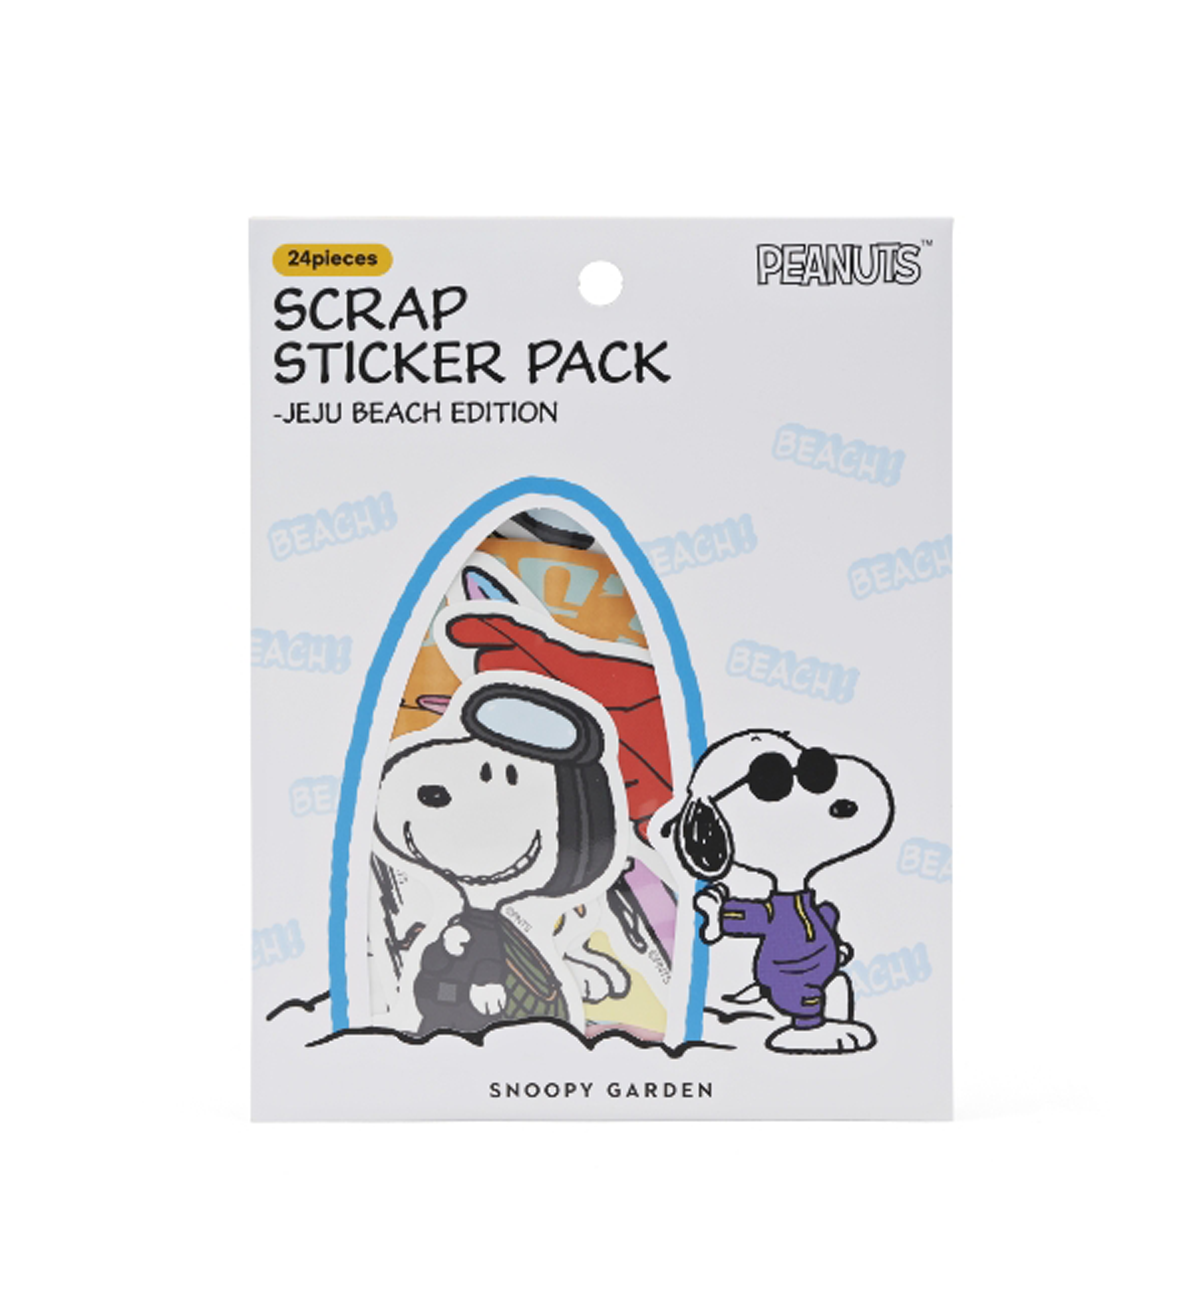 Peanuts Jeju Beach Edition Scrap Sticker Pack [24 Pieces]